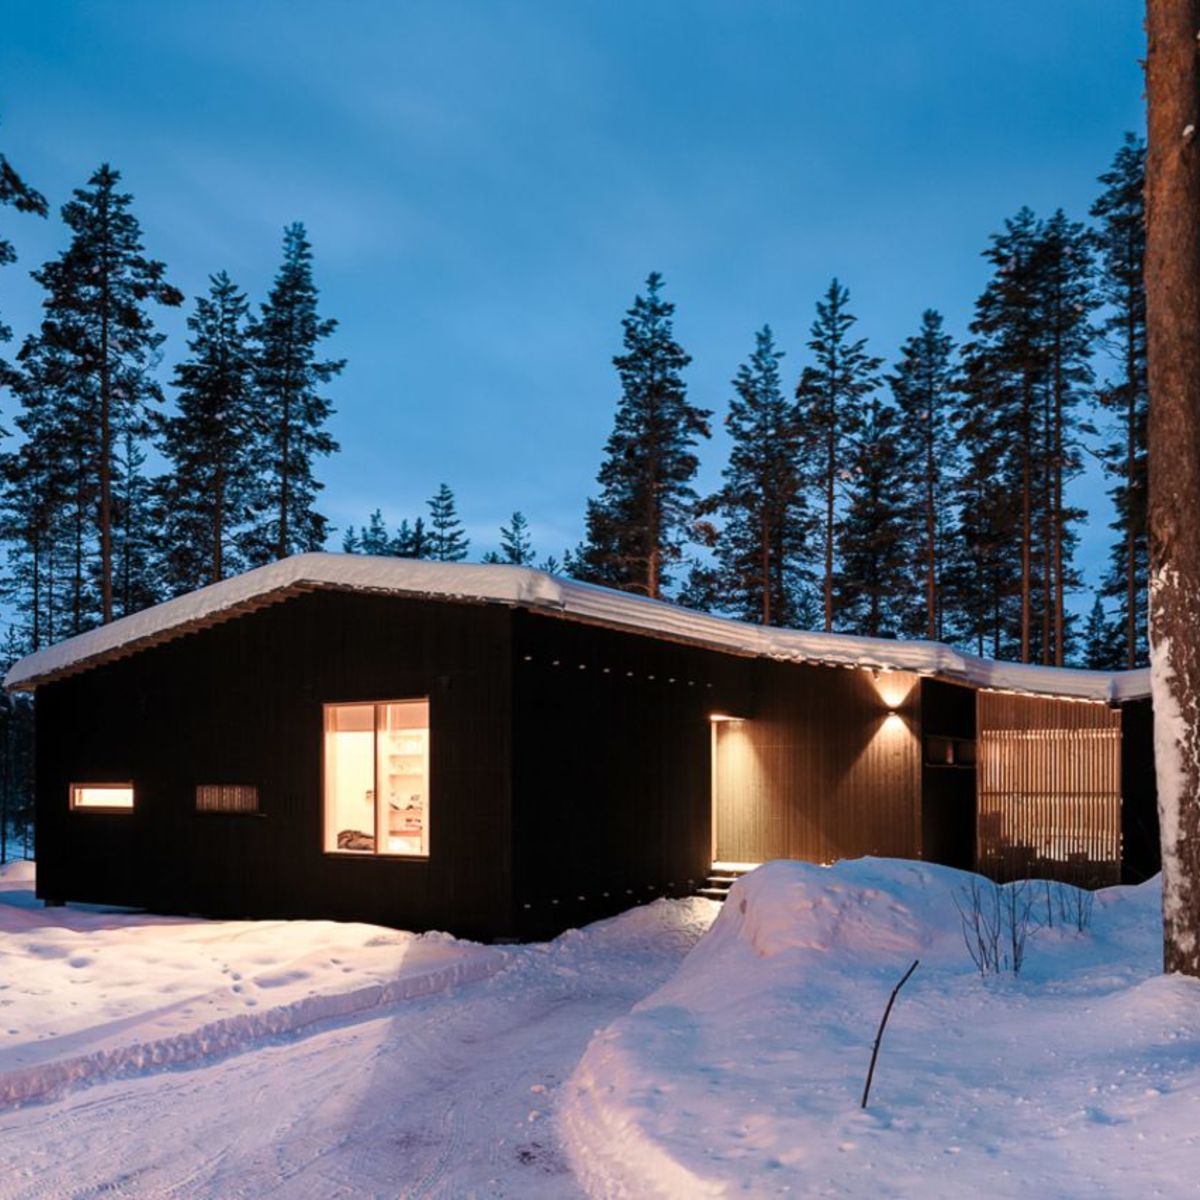 Kettukallio A Lakeside Cabin In Finland Livegreenblog